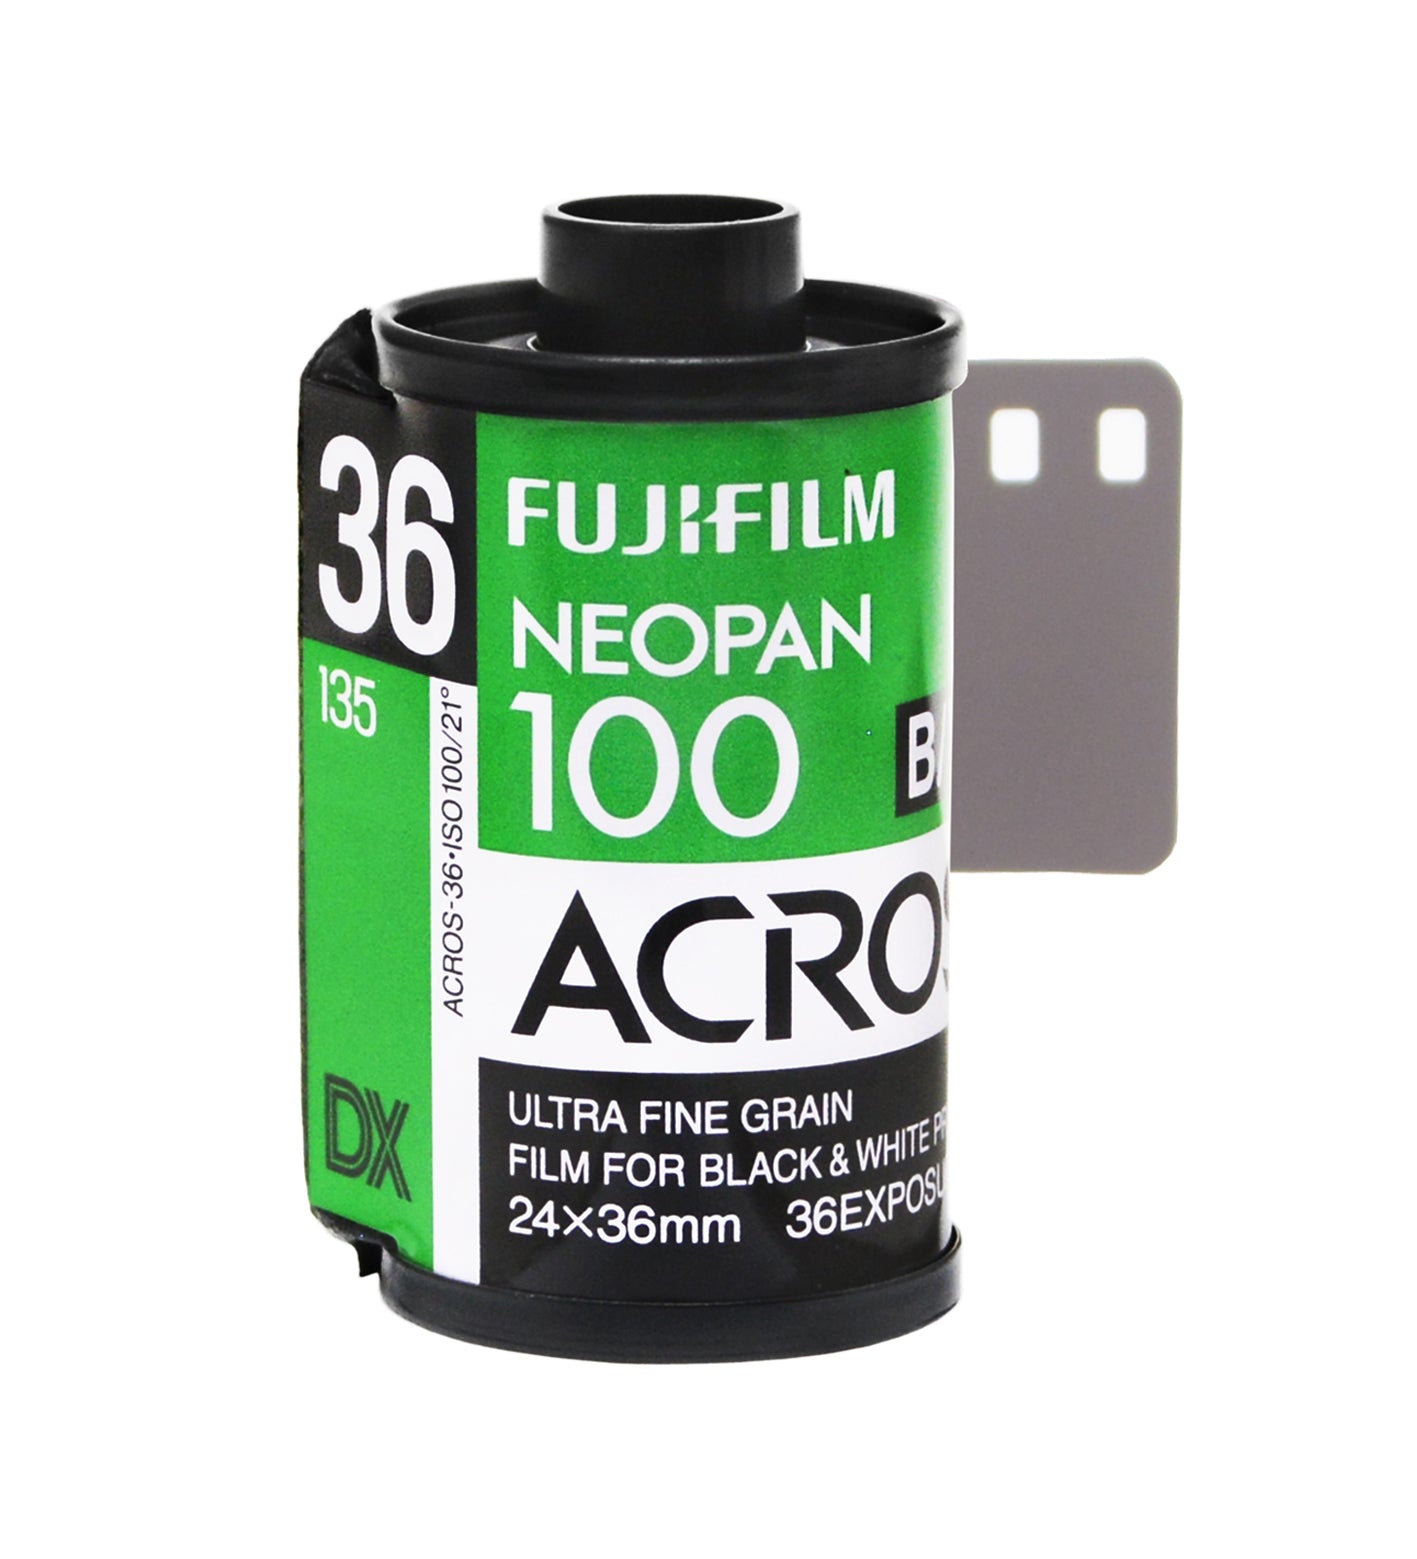 Fujifilm Neopan Acros 100 II 35mm Film 36 Exposures (£11.99 incl